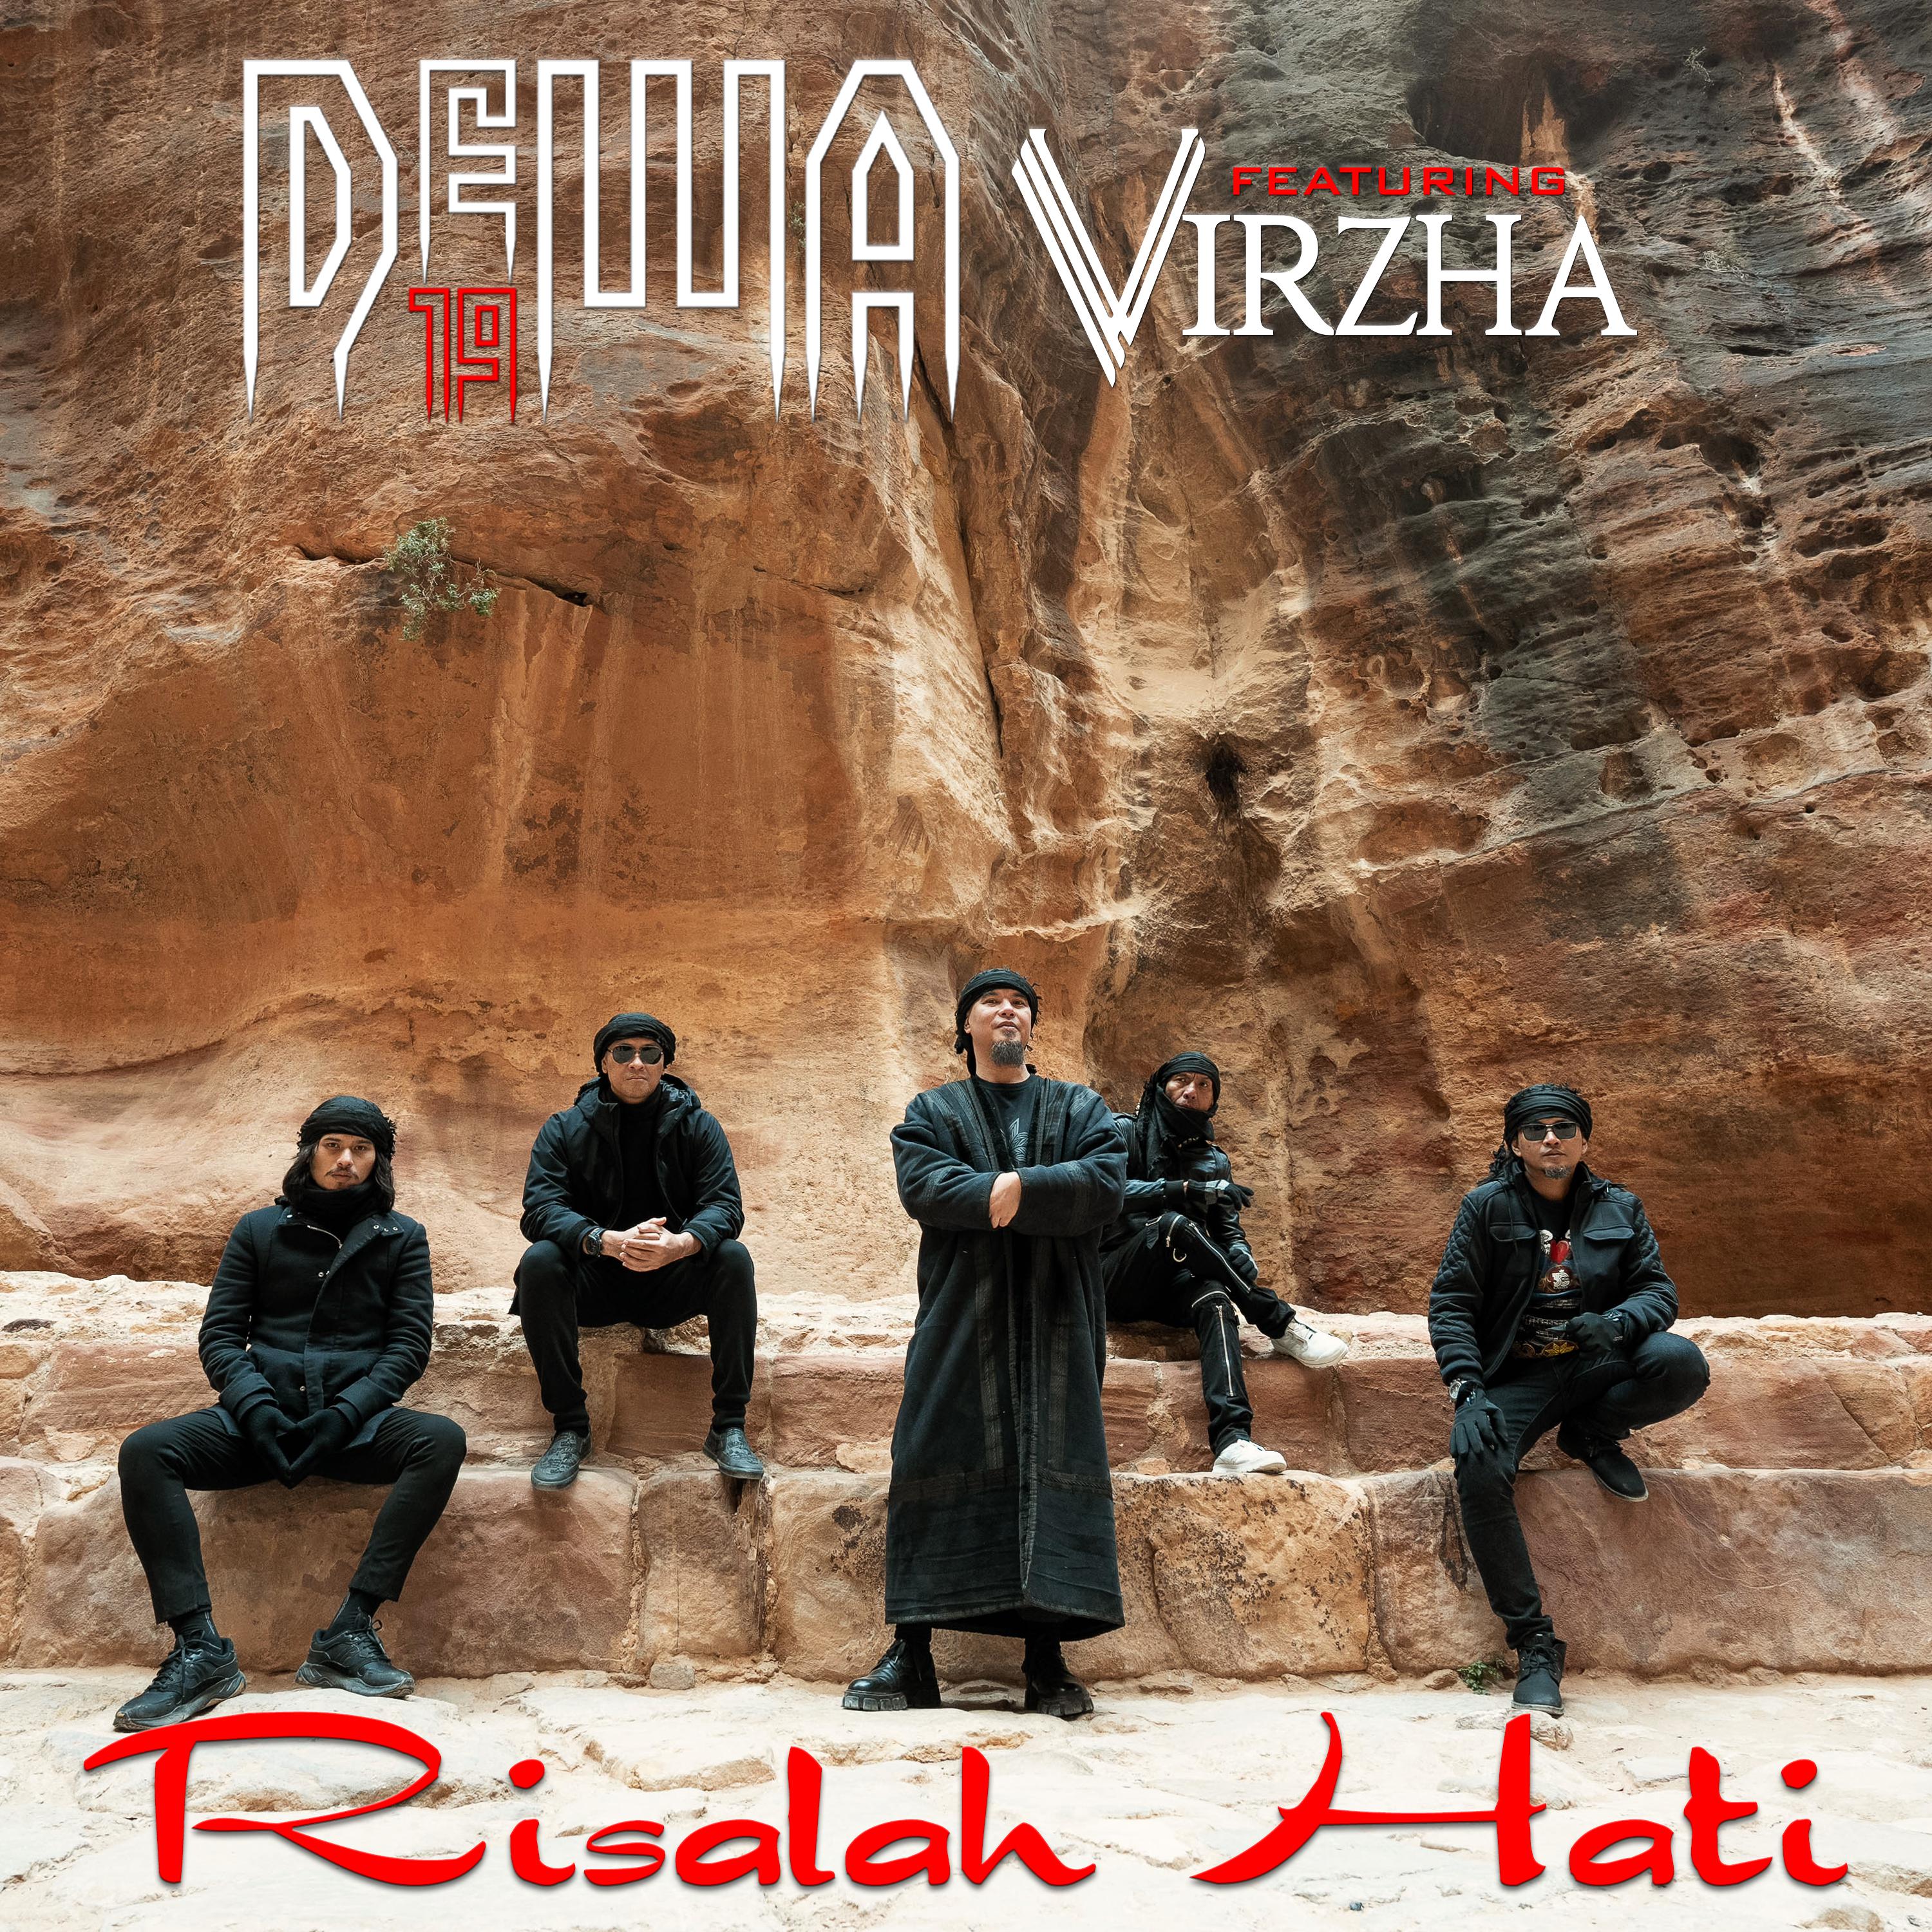 Постер альбома Risalah Hati